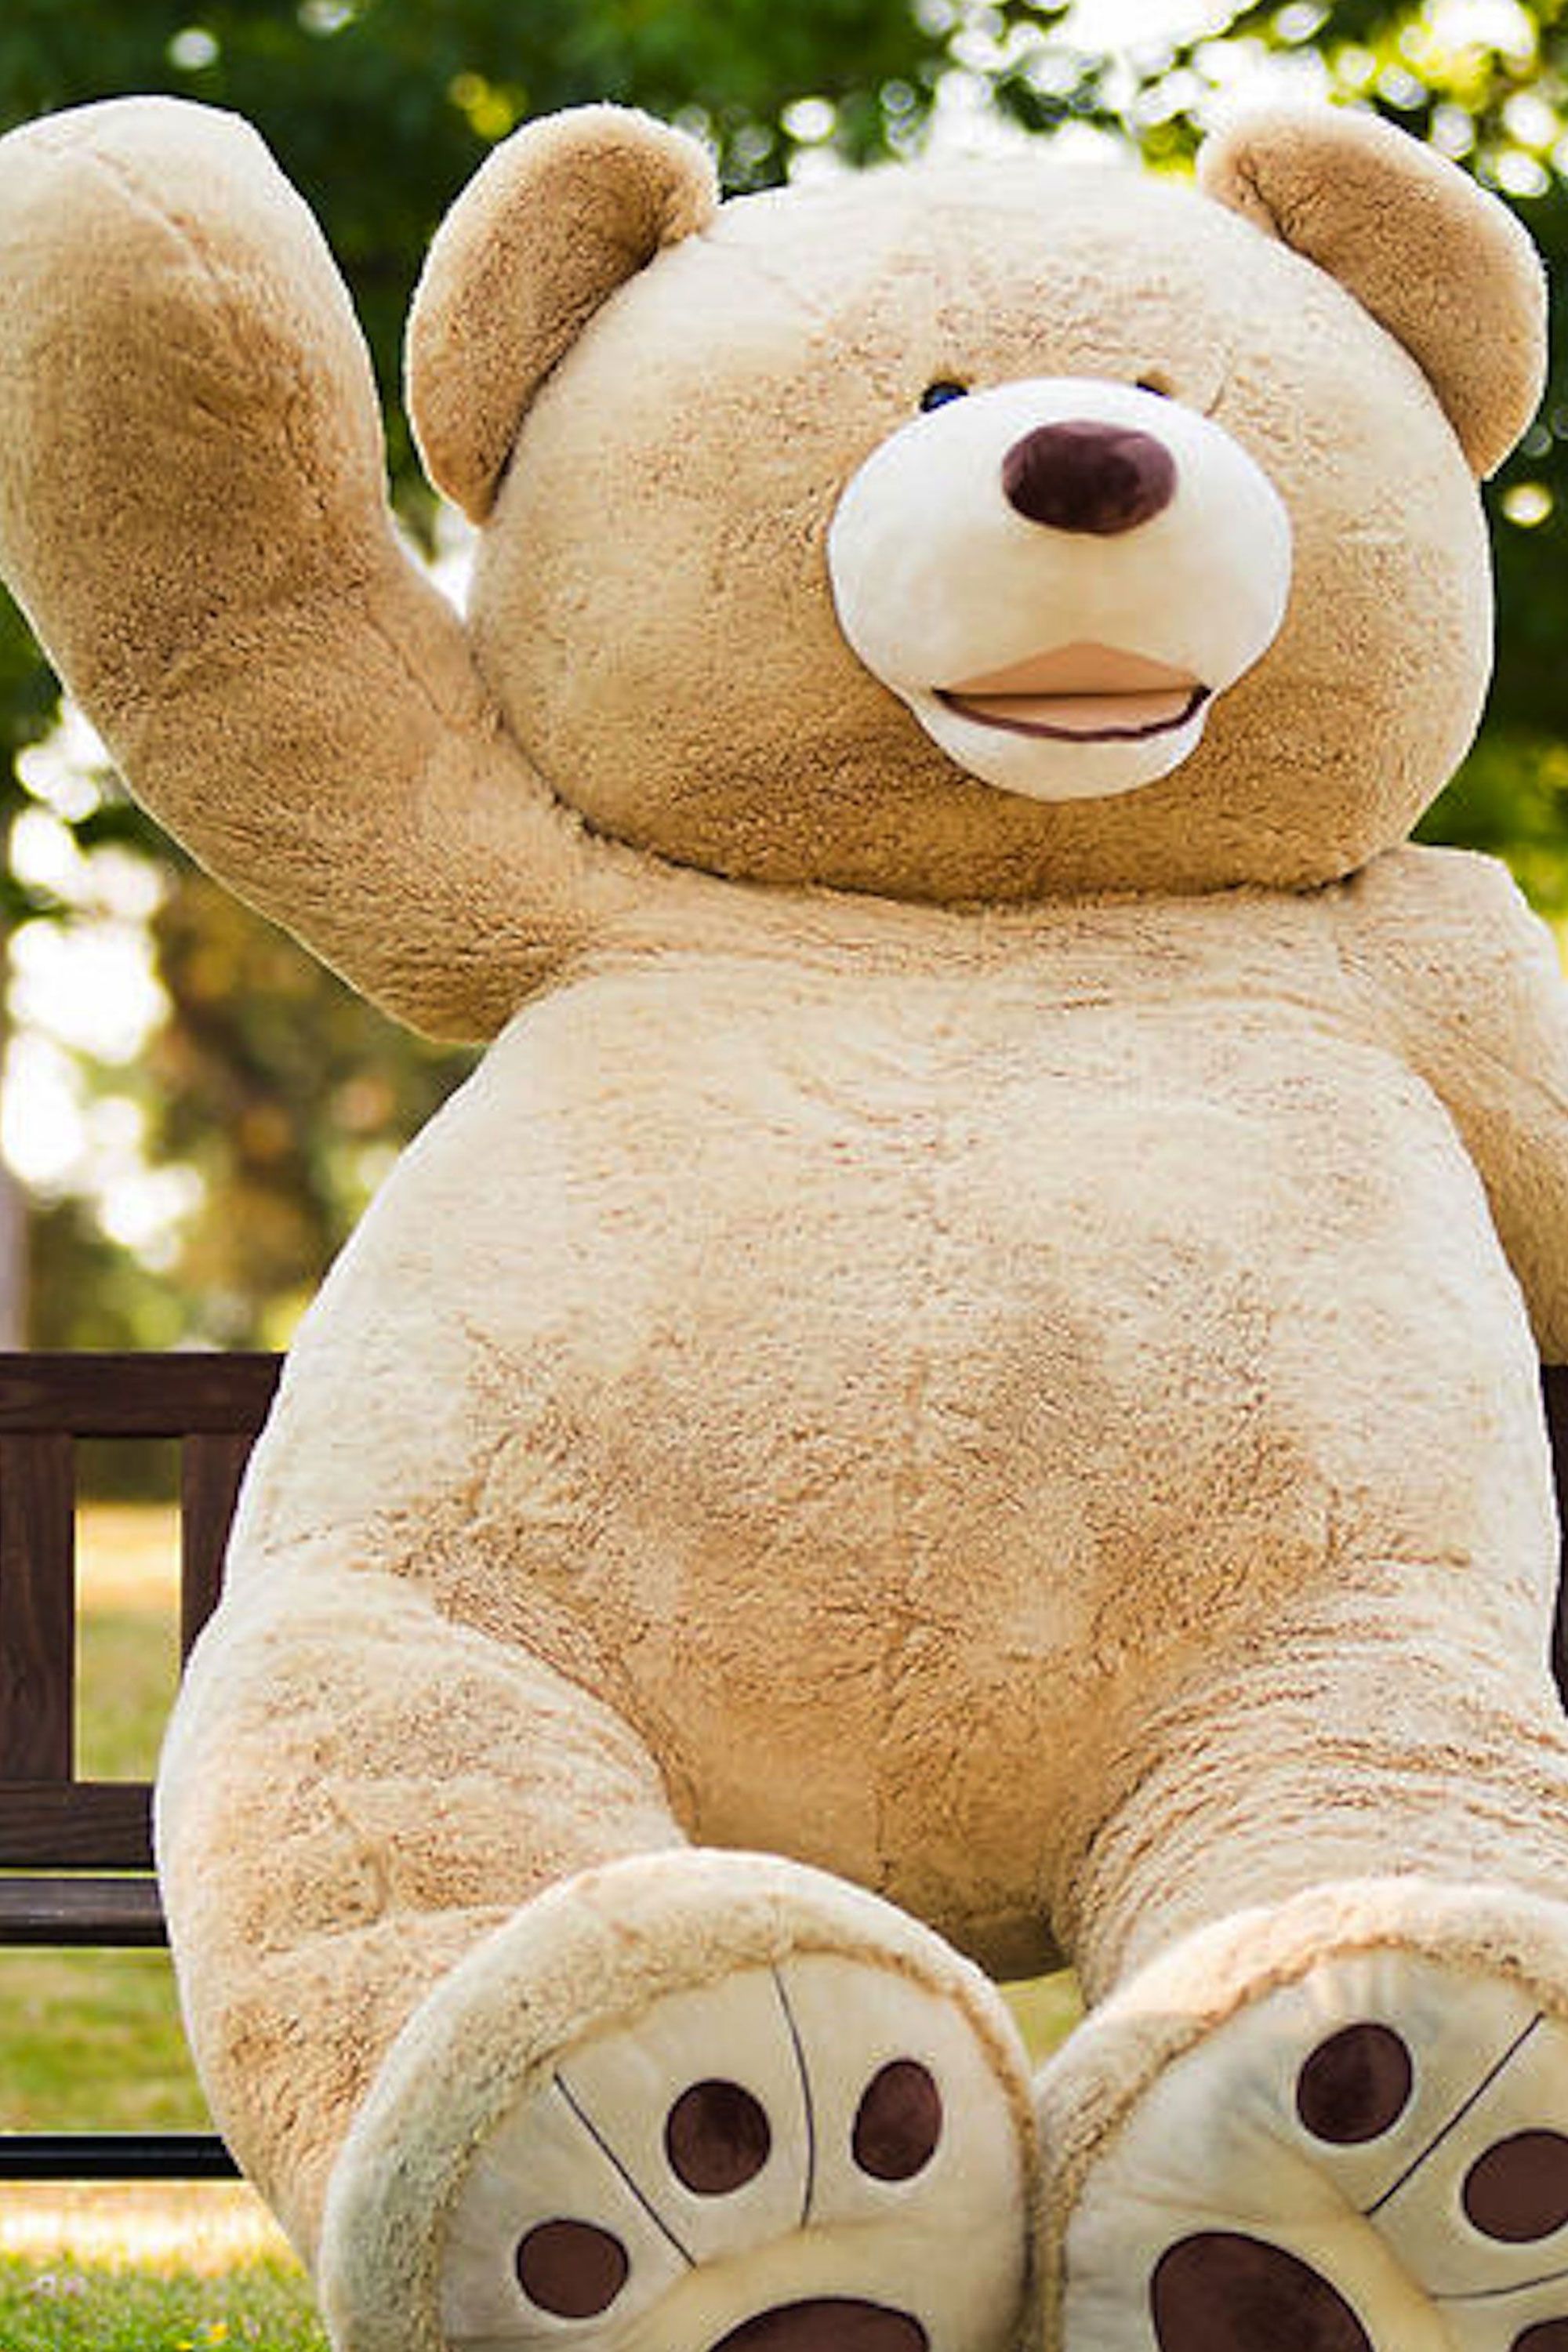 giant teddy bear costco australia